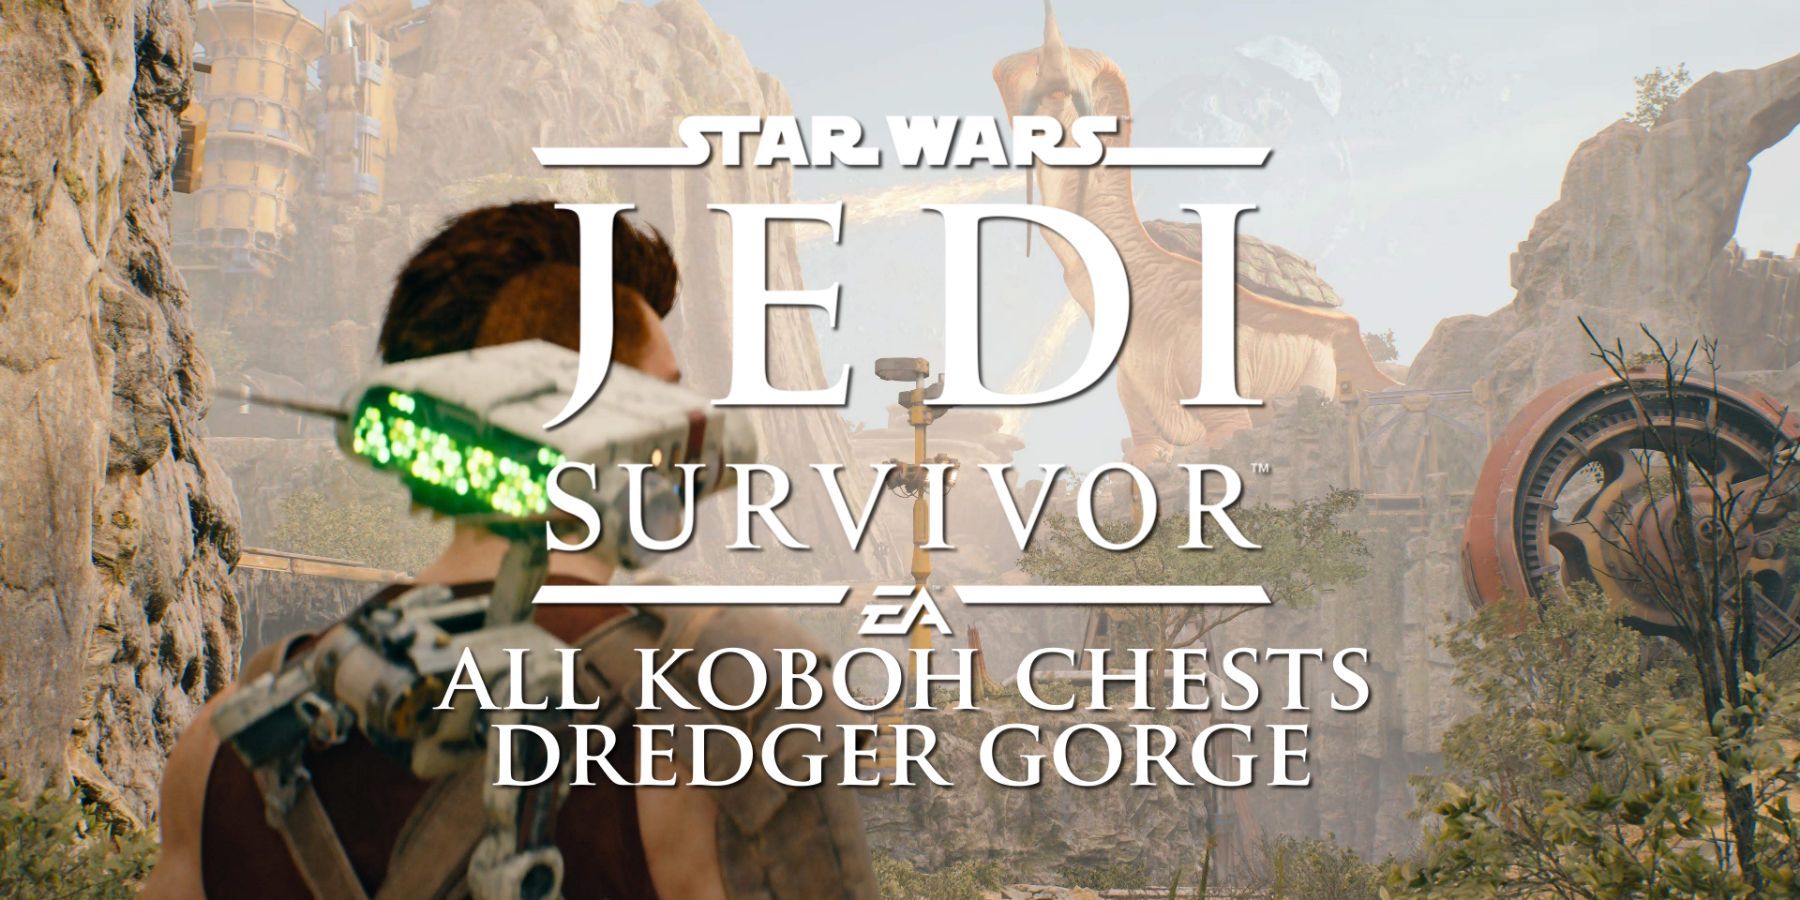 Star Wars Jedi Survivor logo all dredger gorge chests